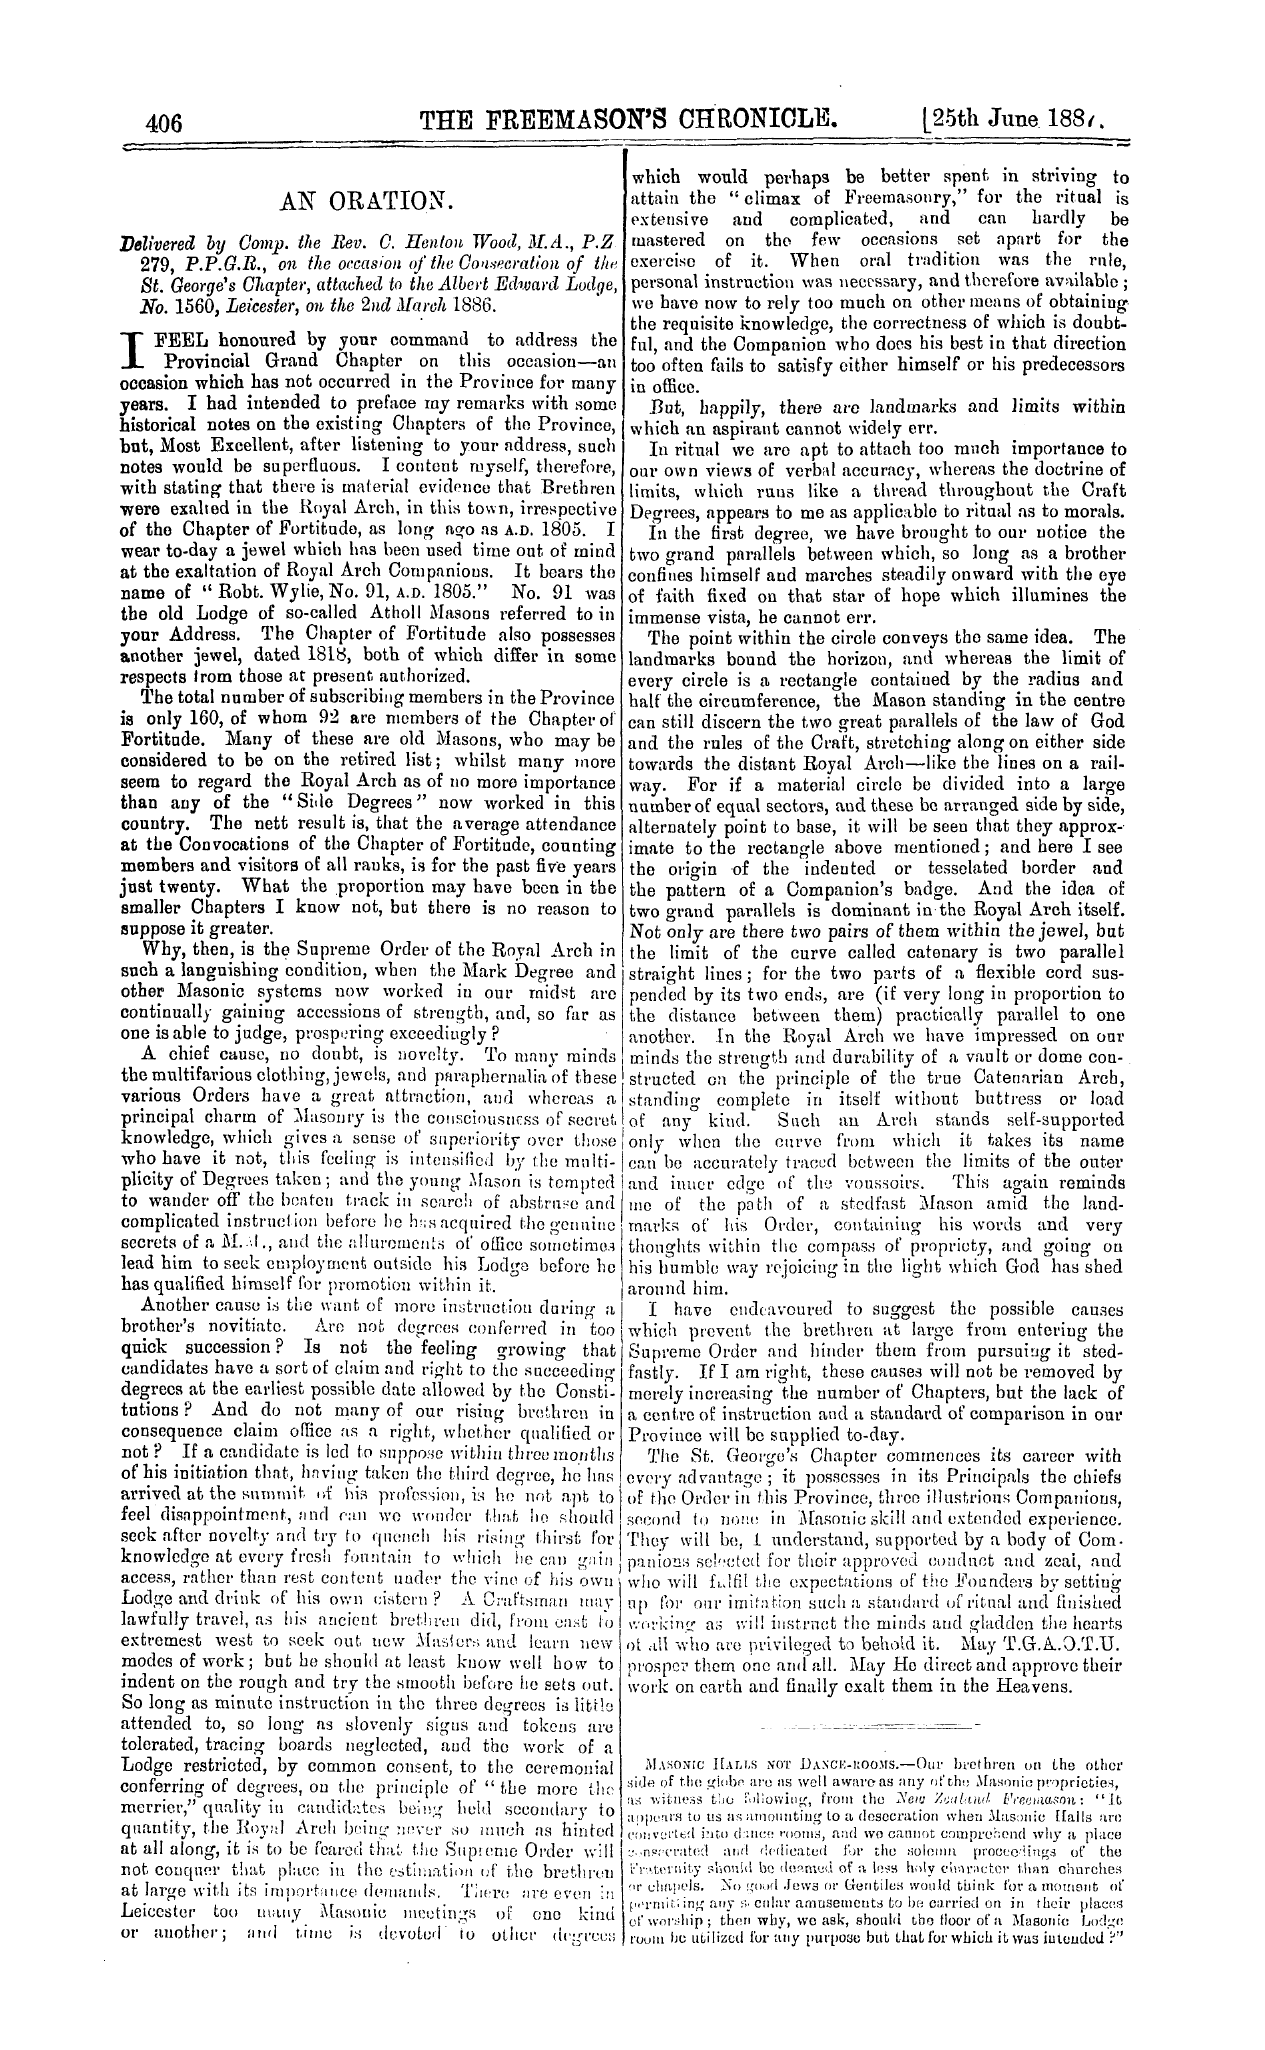 The Freemason's Chronicle: 1887-06-25 - An Oration.